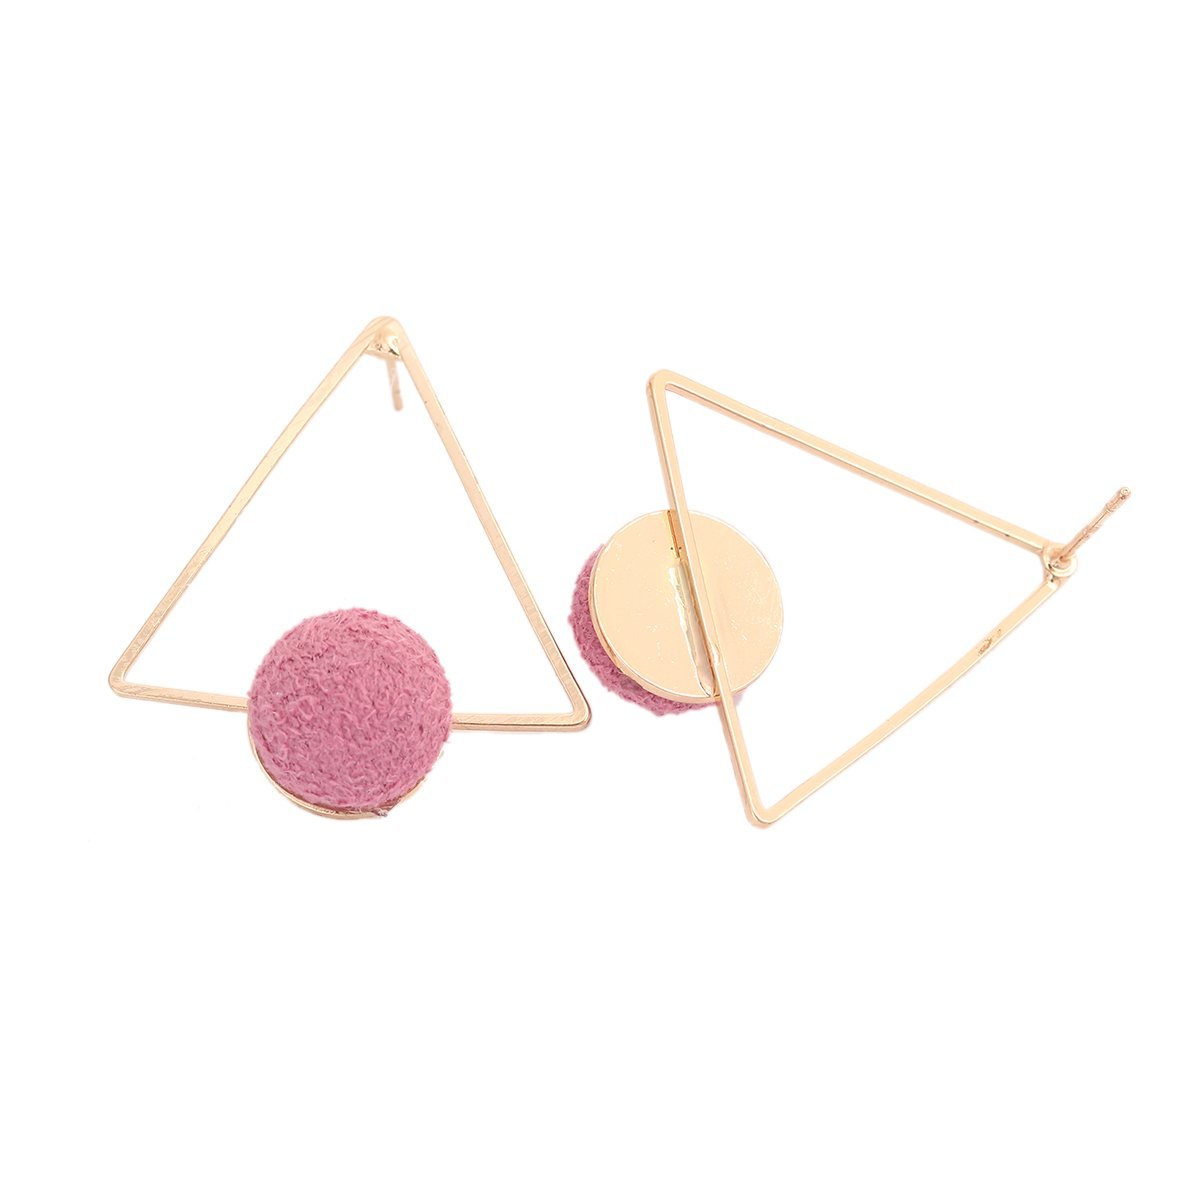 Gold Triangle Pom Pom Ball Earrings - My Custom Tee Party